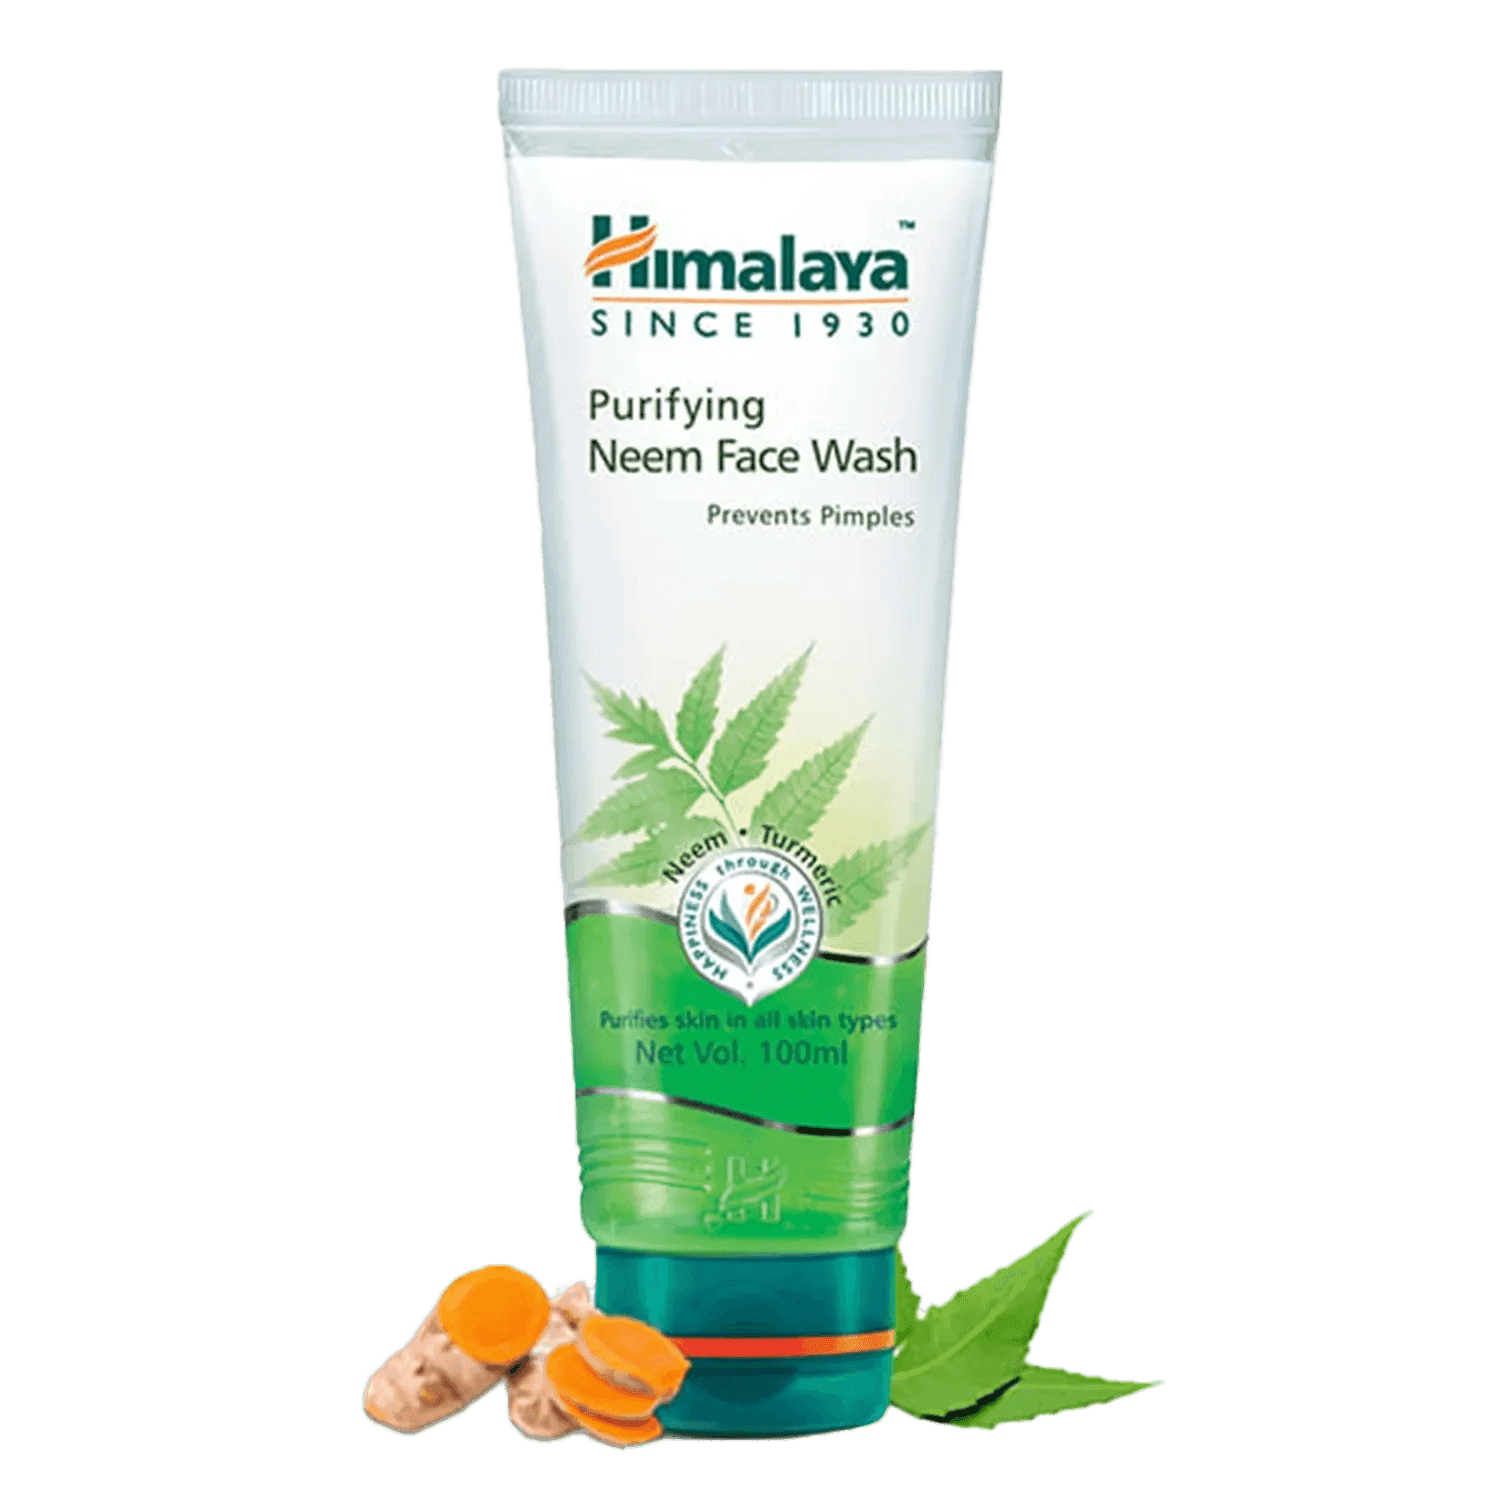 himalaya purifying neem face wash (100ml)